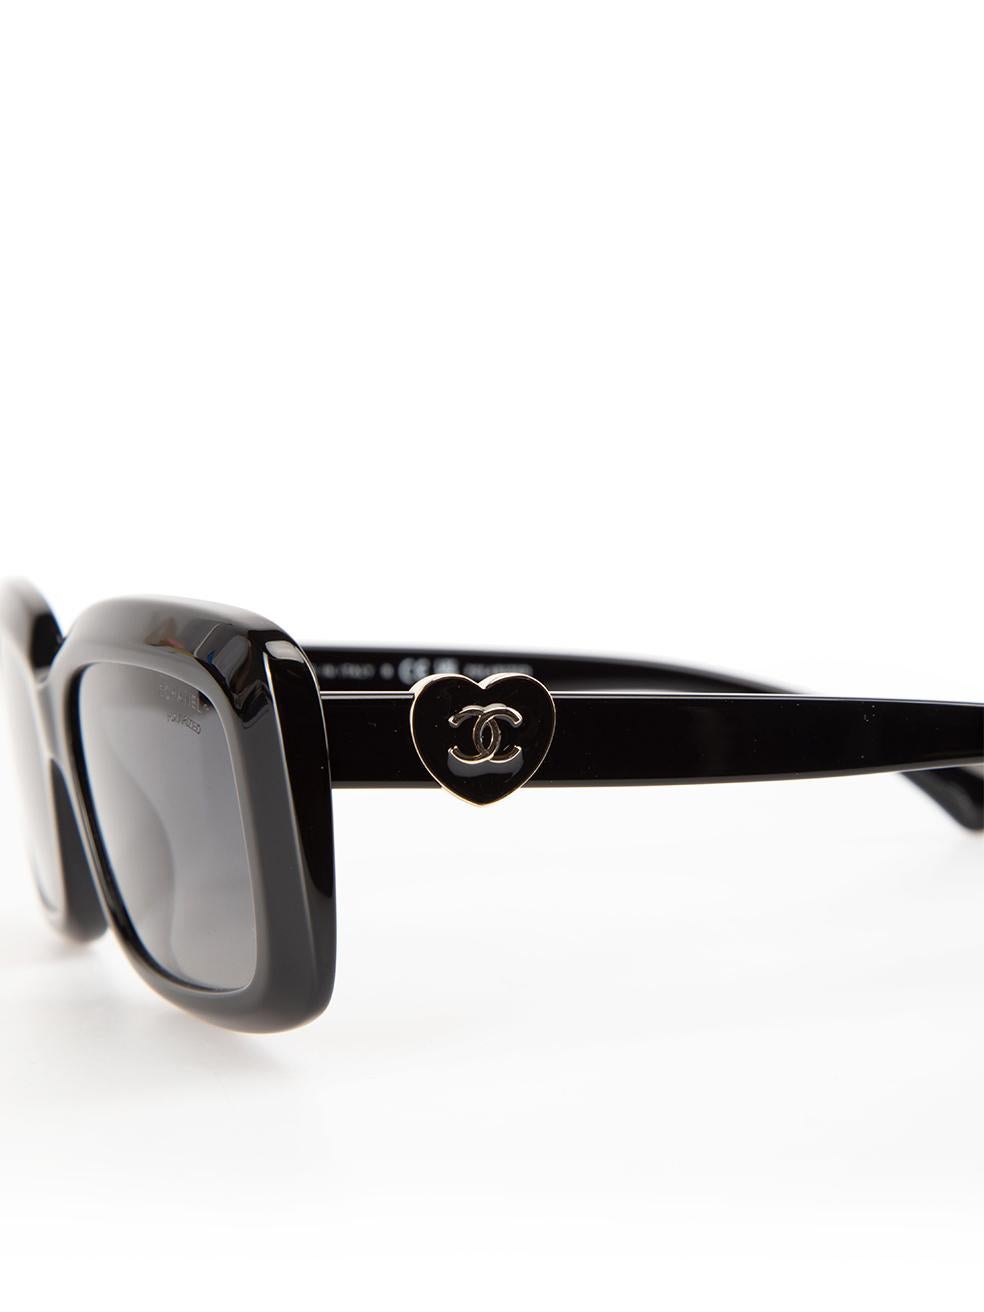 Chanel Black Heart Logo Rectangle Sunglasses 2